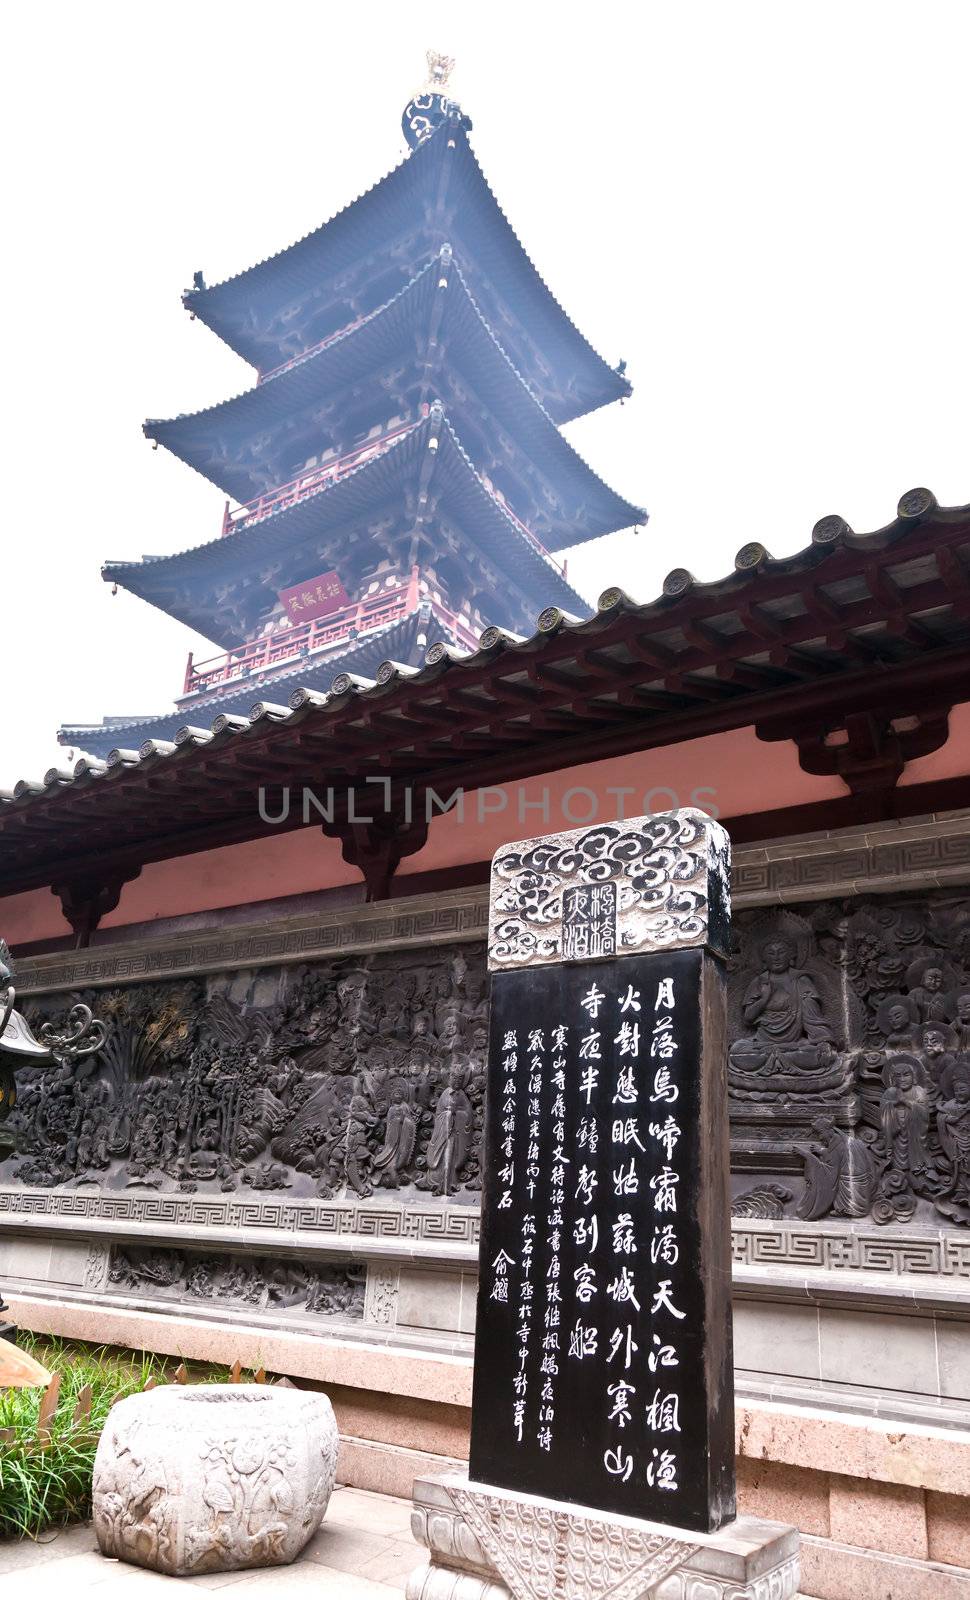 Han-Shan-Si Temple in Suzhou China by gary718